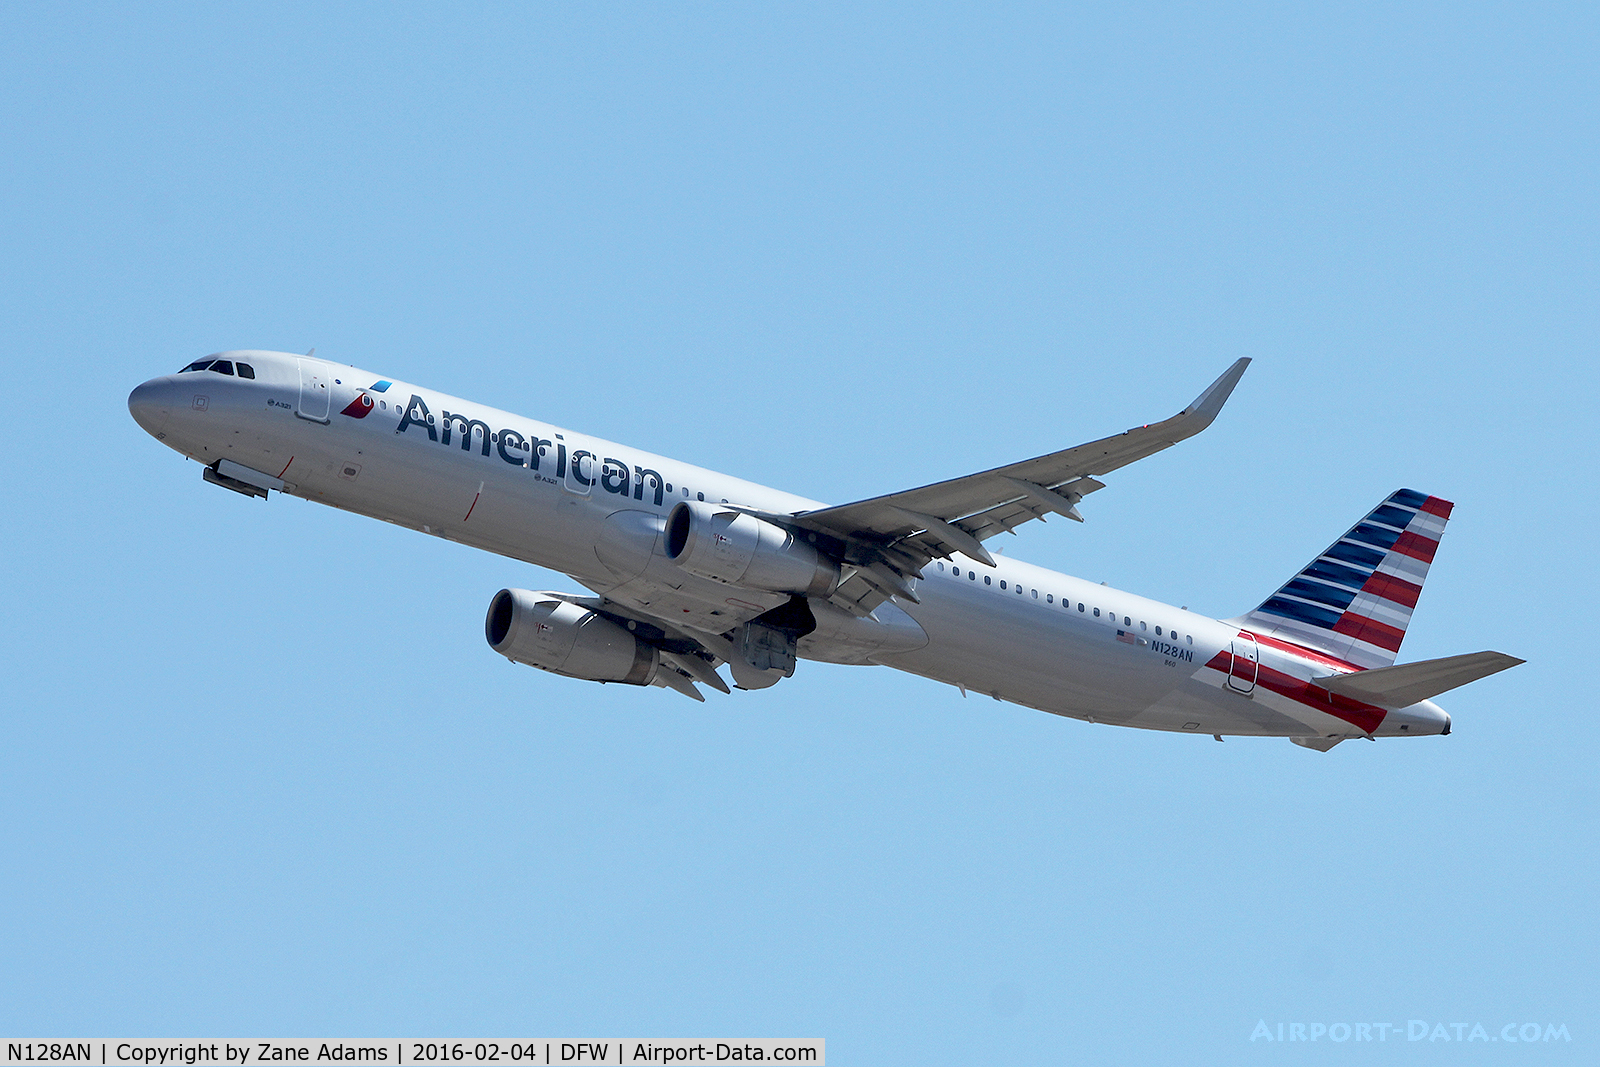 N128AN, 2014 Airbus A321-231 C/N 6346, Departing DFW Airport